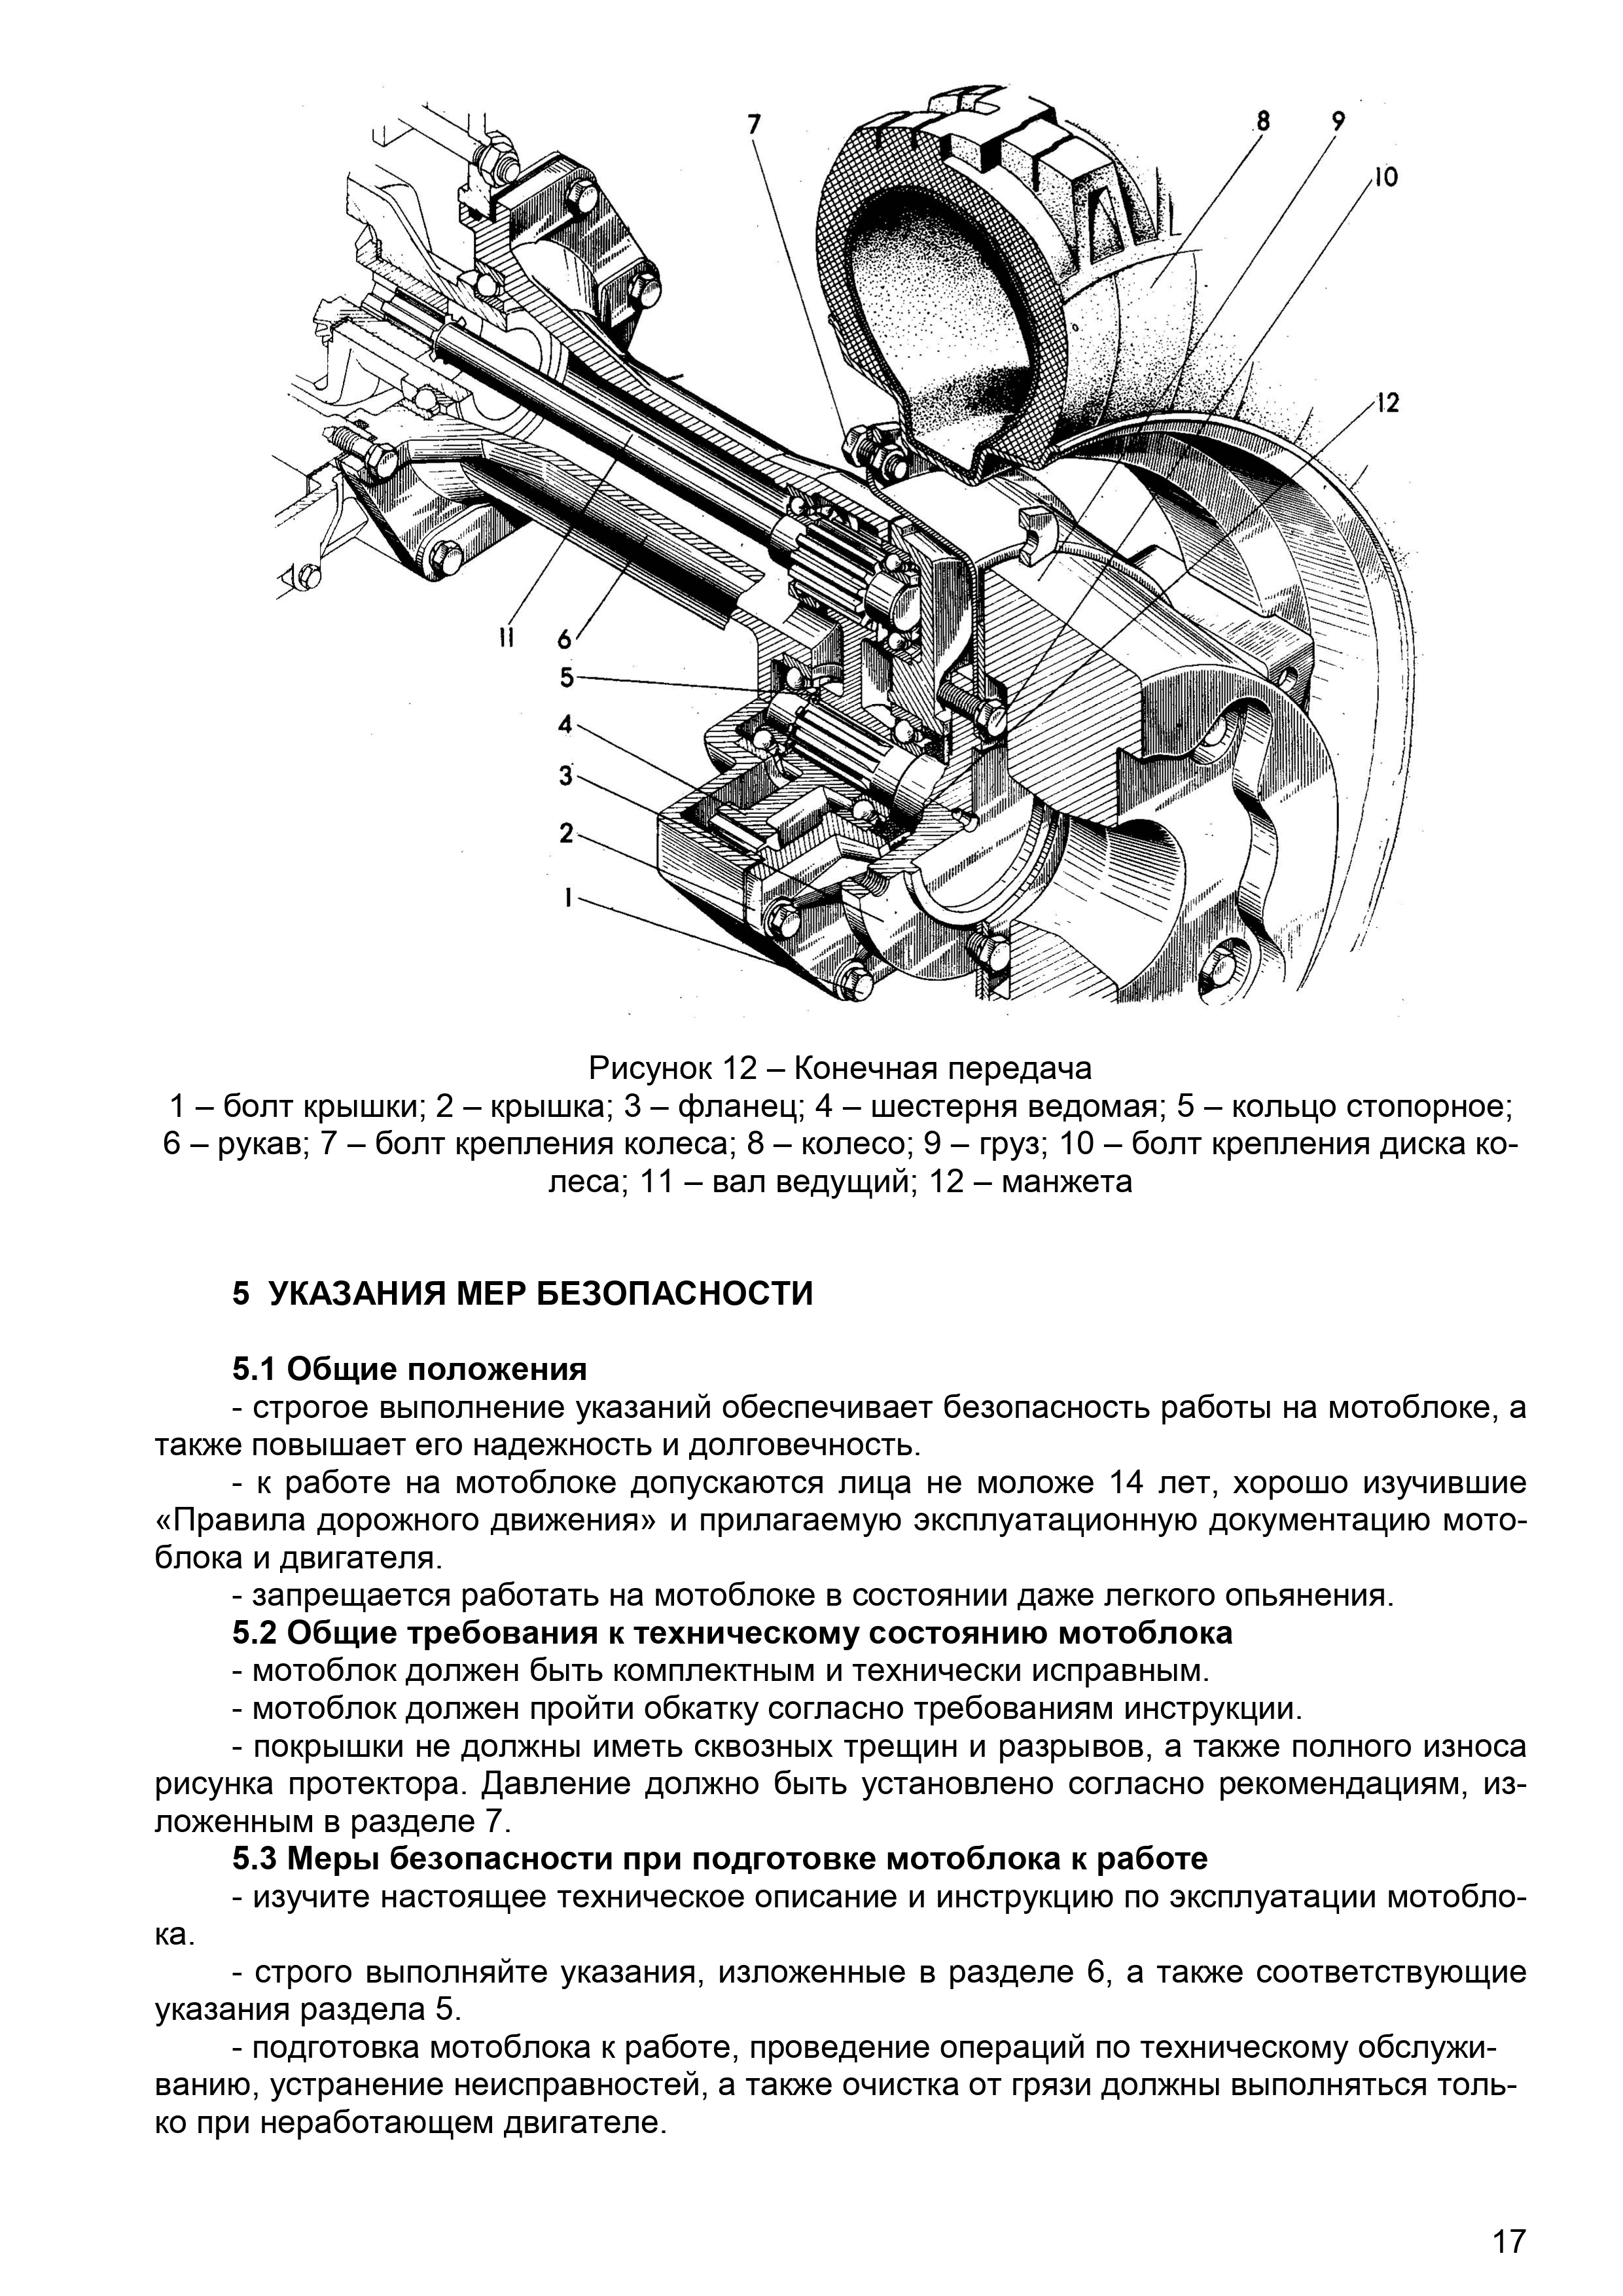 belarus_09h_manual i catalog (1)_page-0017